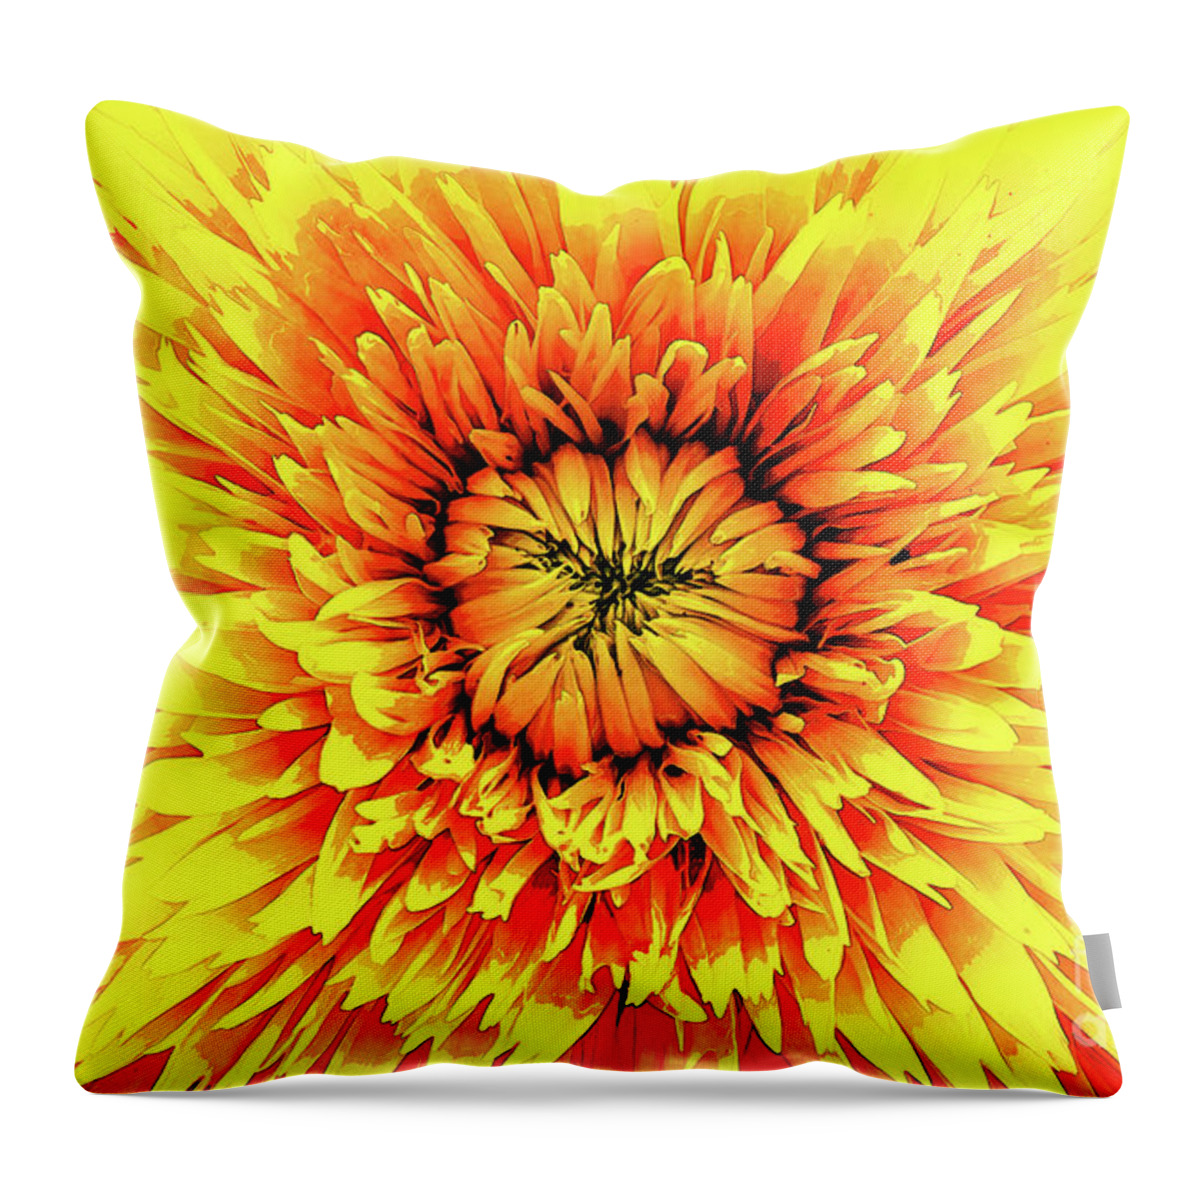 Macro Throw Pillow featuring the digital art Macro Flower Petals by Phil Perkins